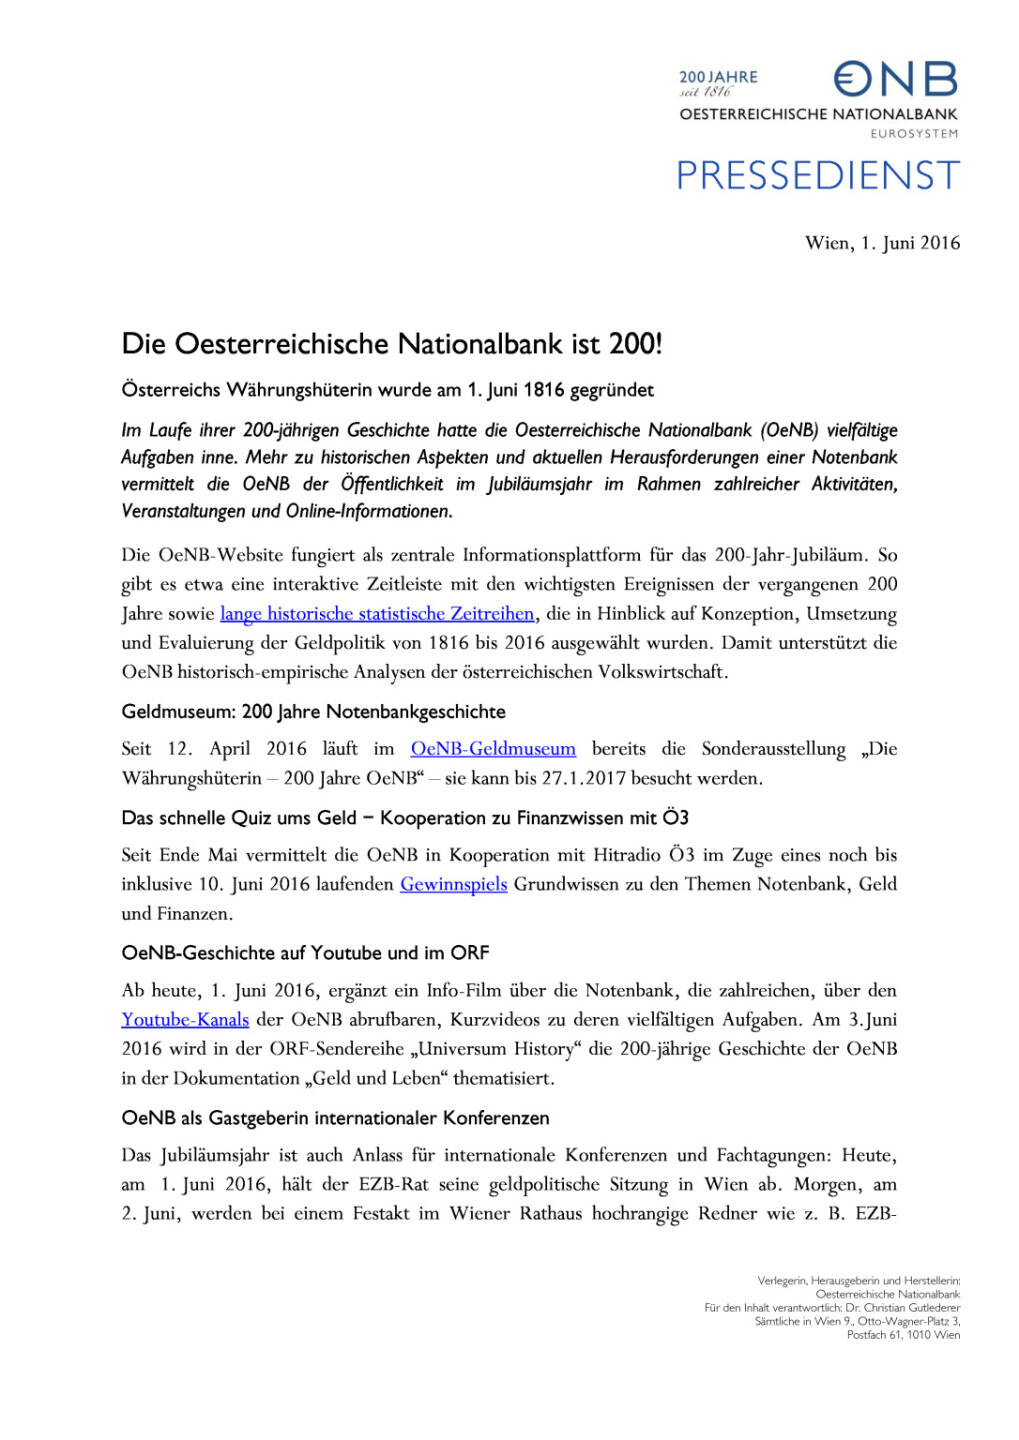 OeNB: 200-Jahr-Jubiläum, Seite 1/2, komplettes Dokument unter http://boerse-social.com/static/uploads/file_1149_oenb_200-jahr-jubilaum.pdf